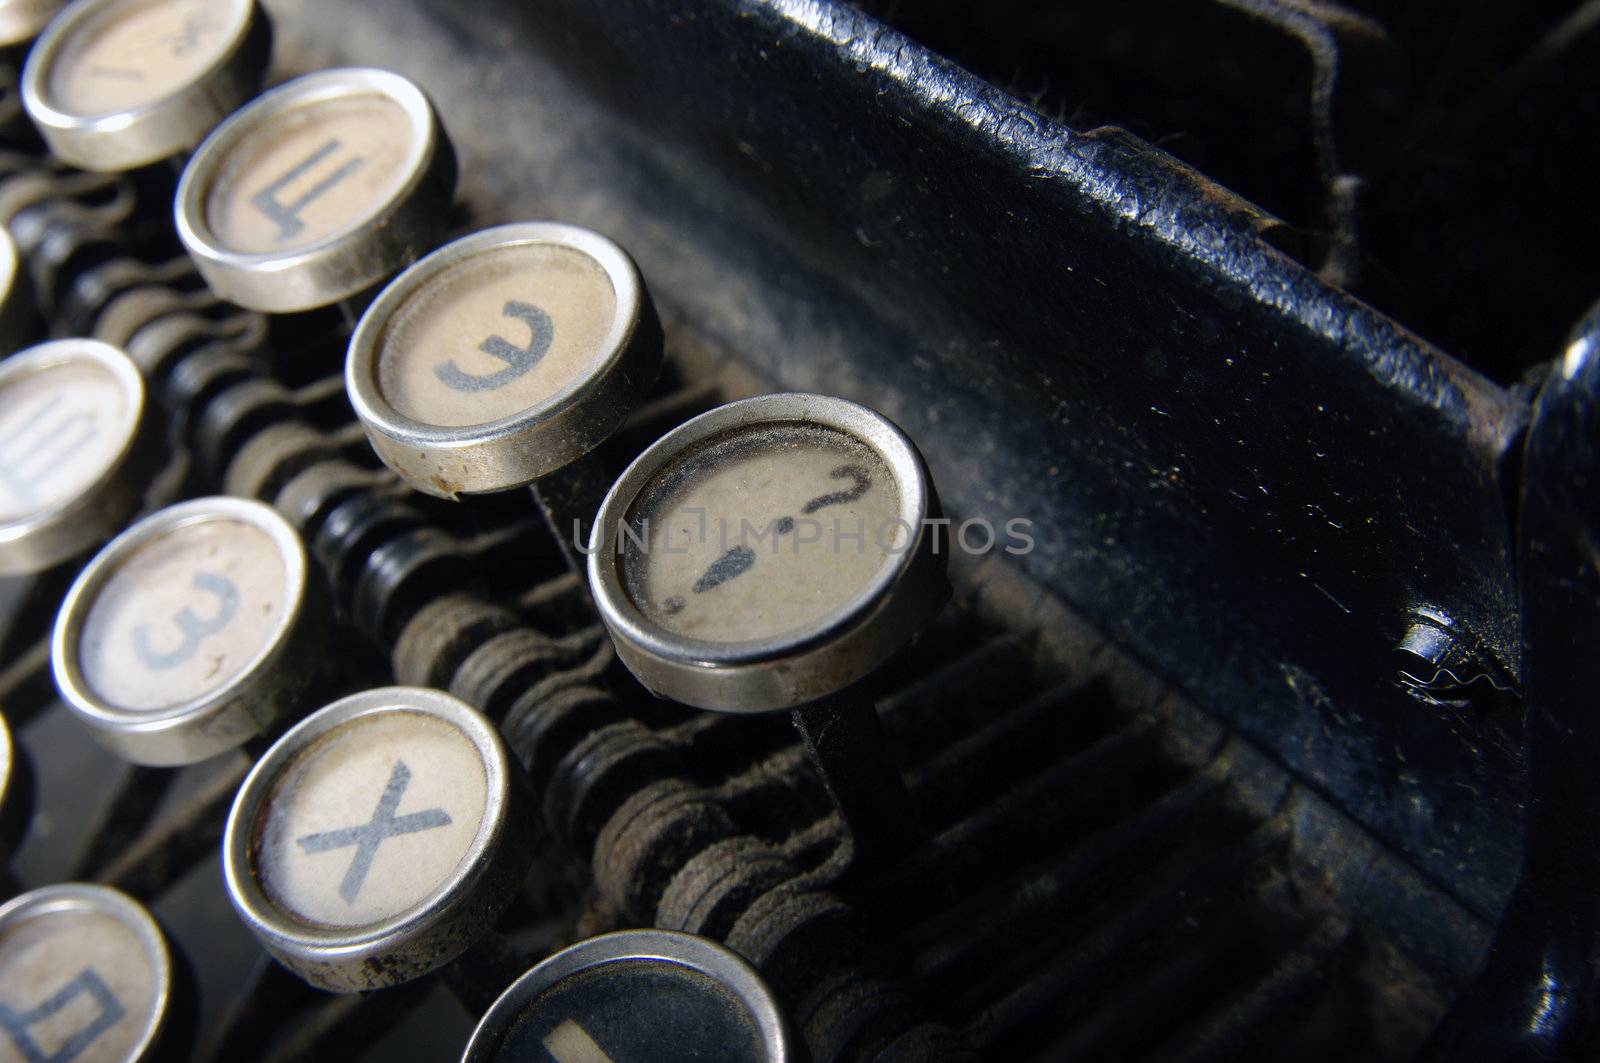 typewriter by sibrikov